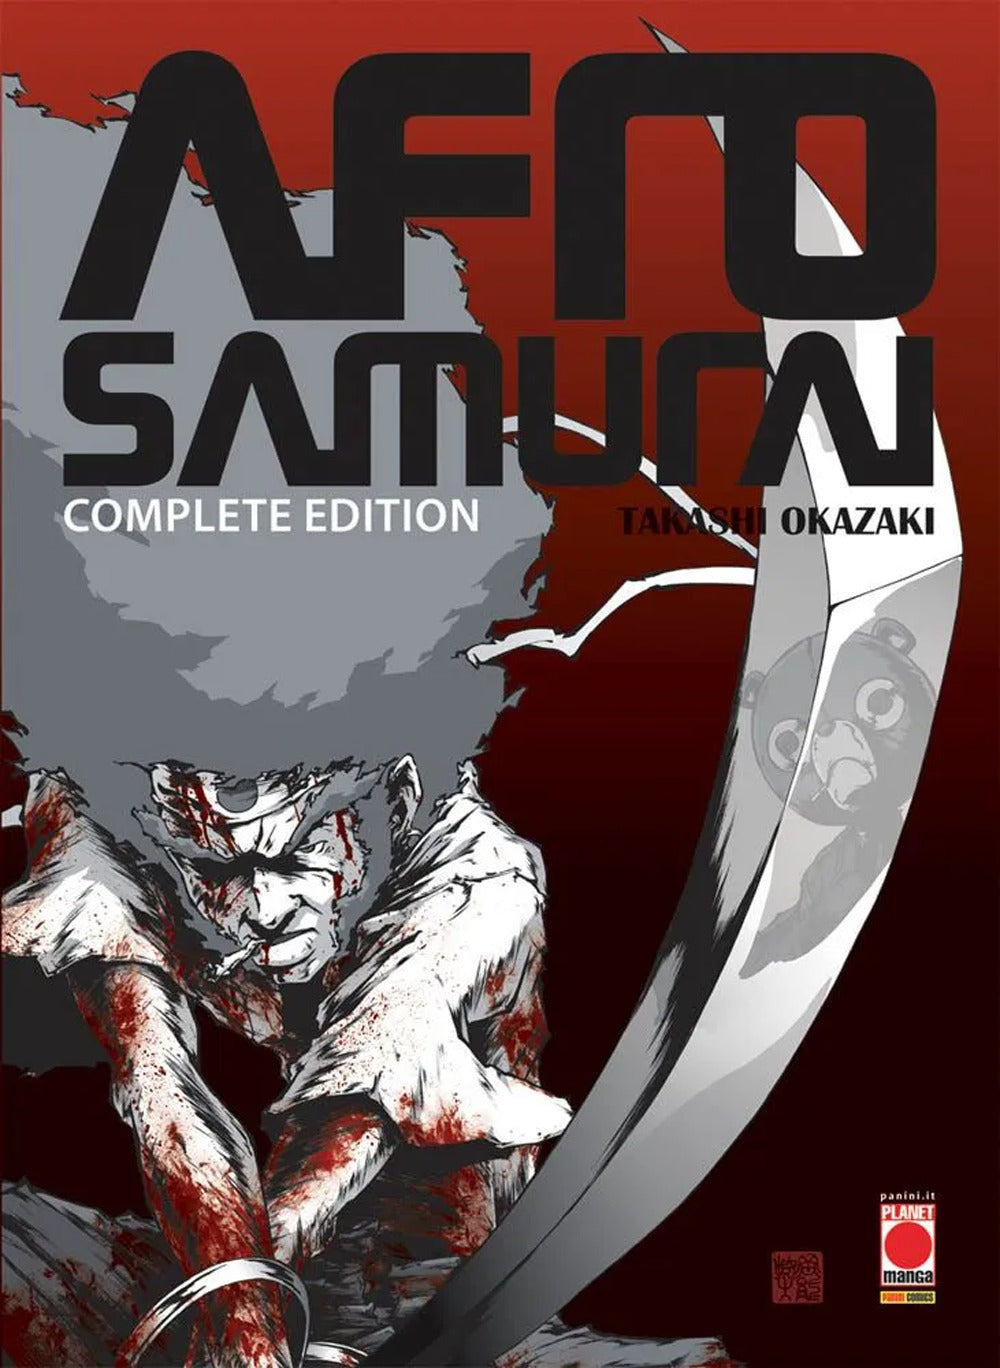 Afro samurai. Complete edition.